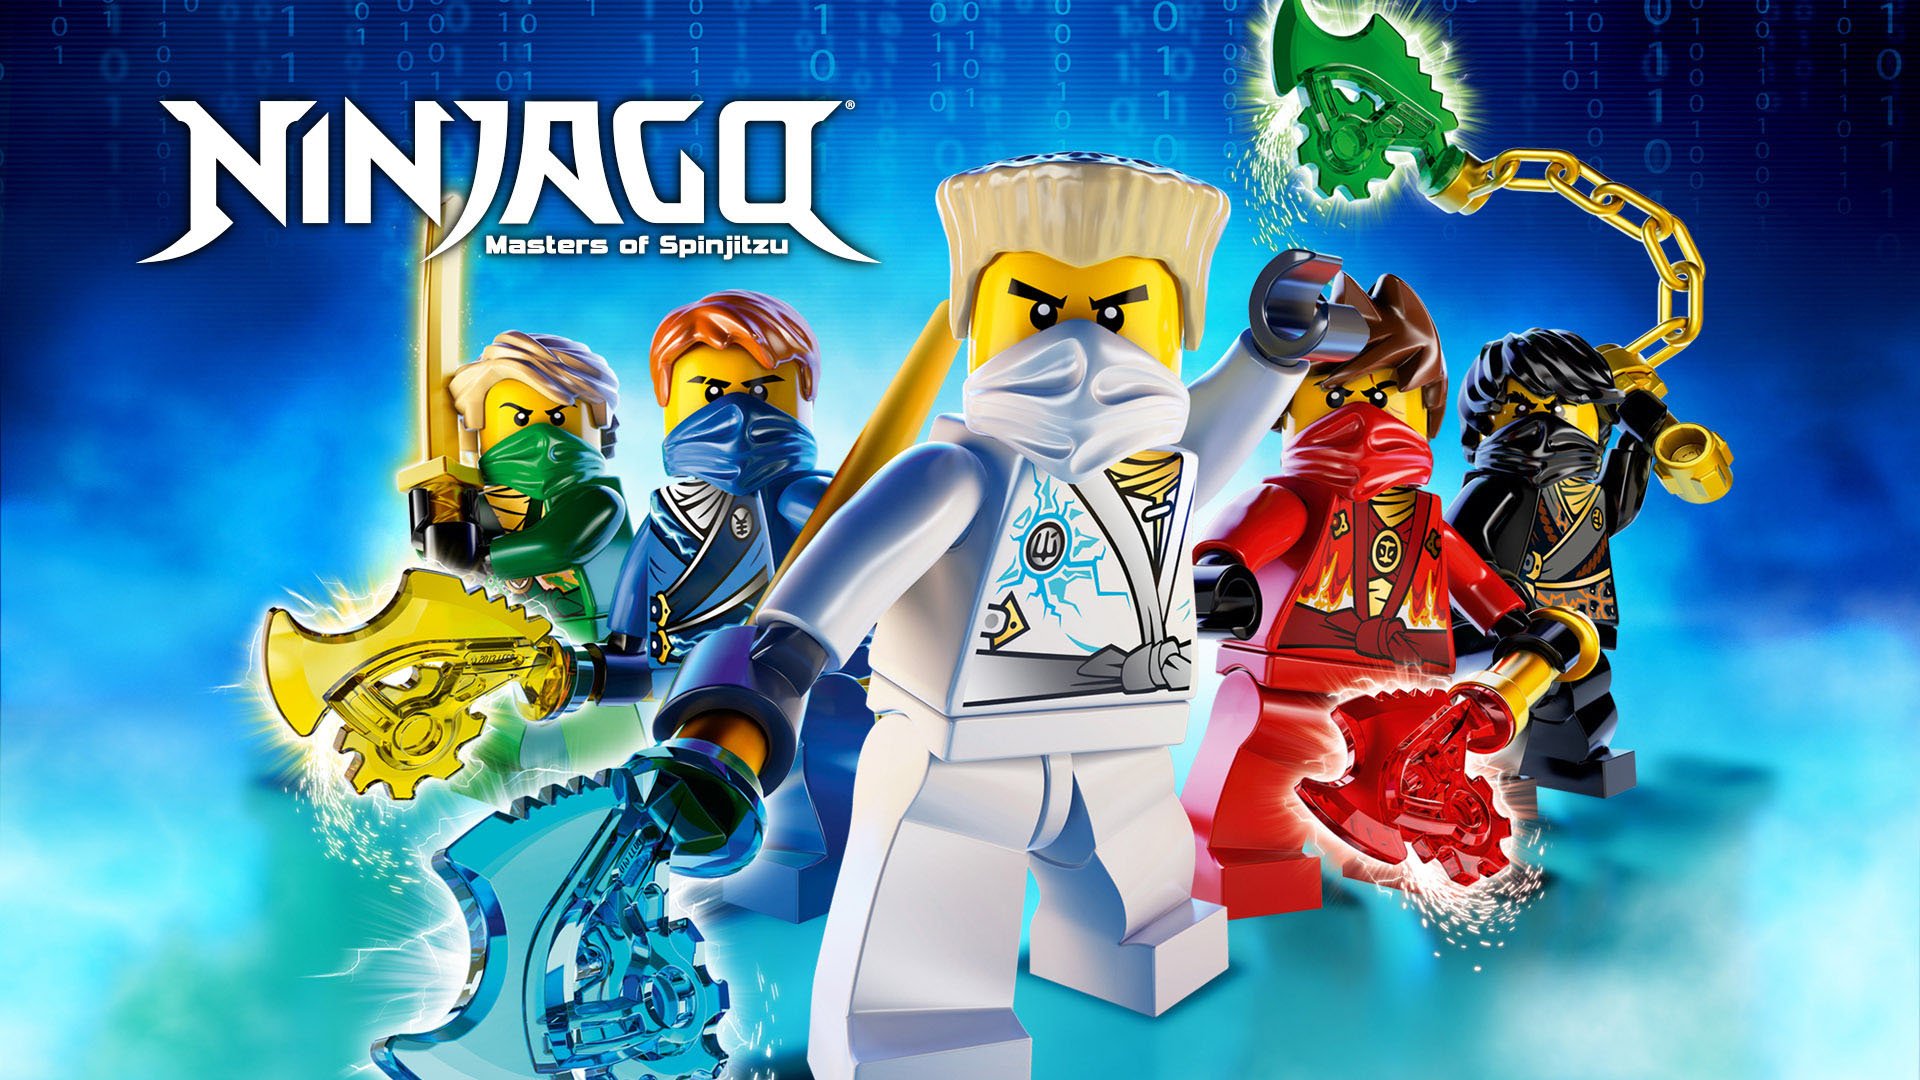 Watch LEGO Ninjago: Masters of Spinjitzu